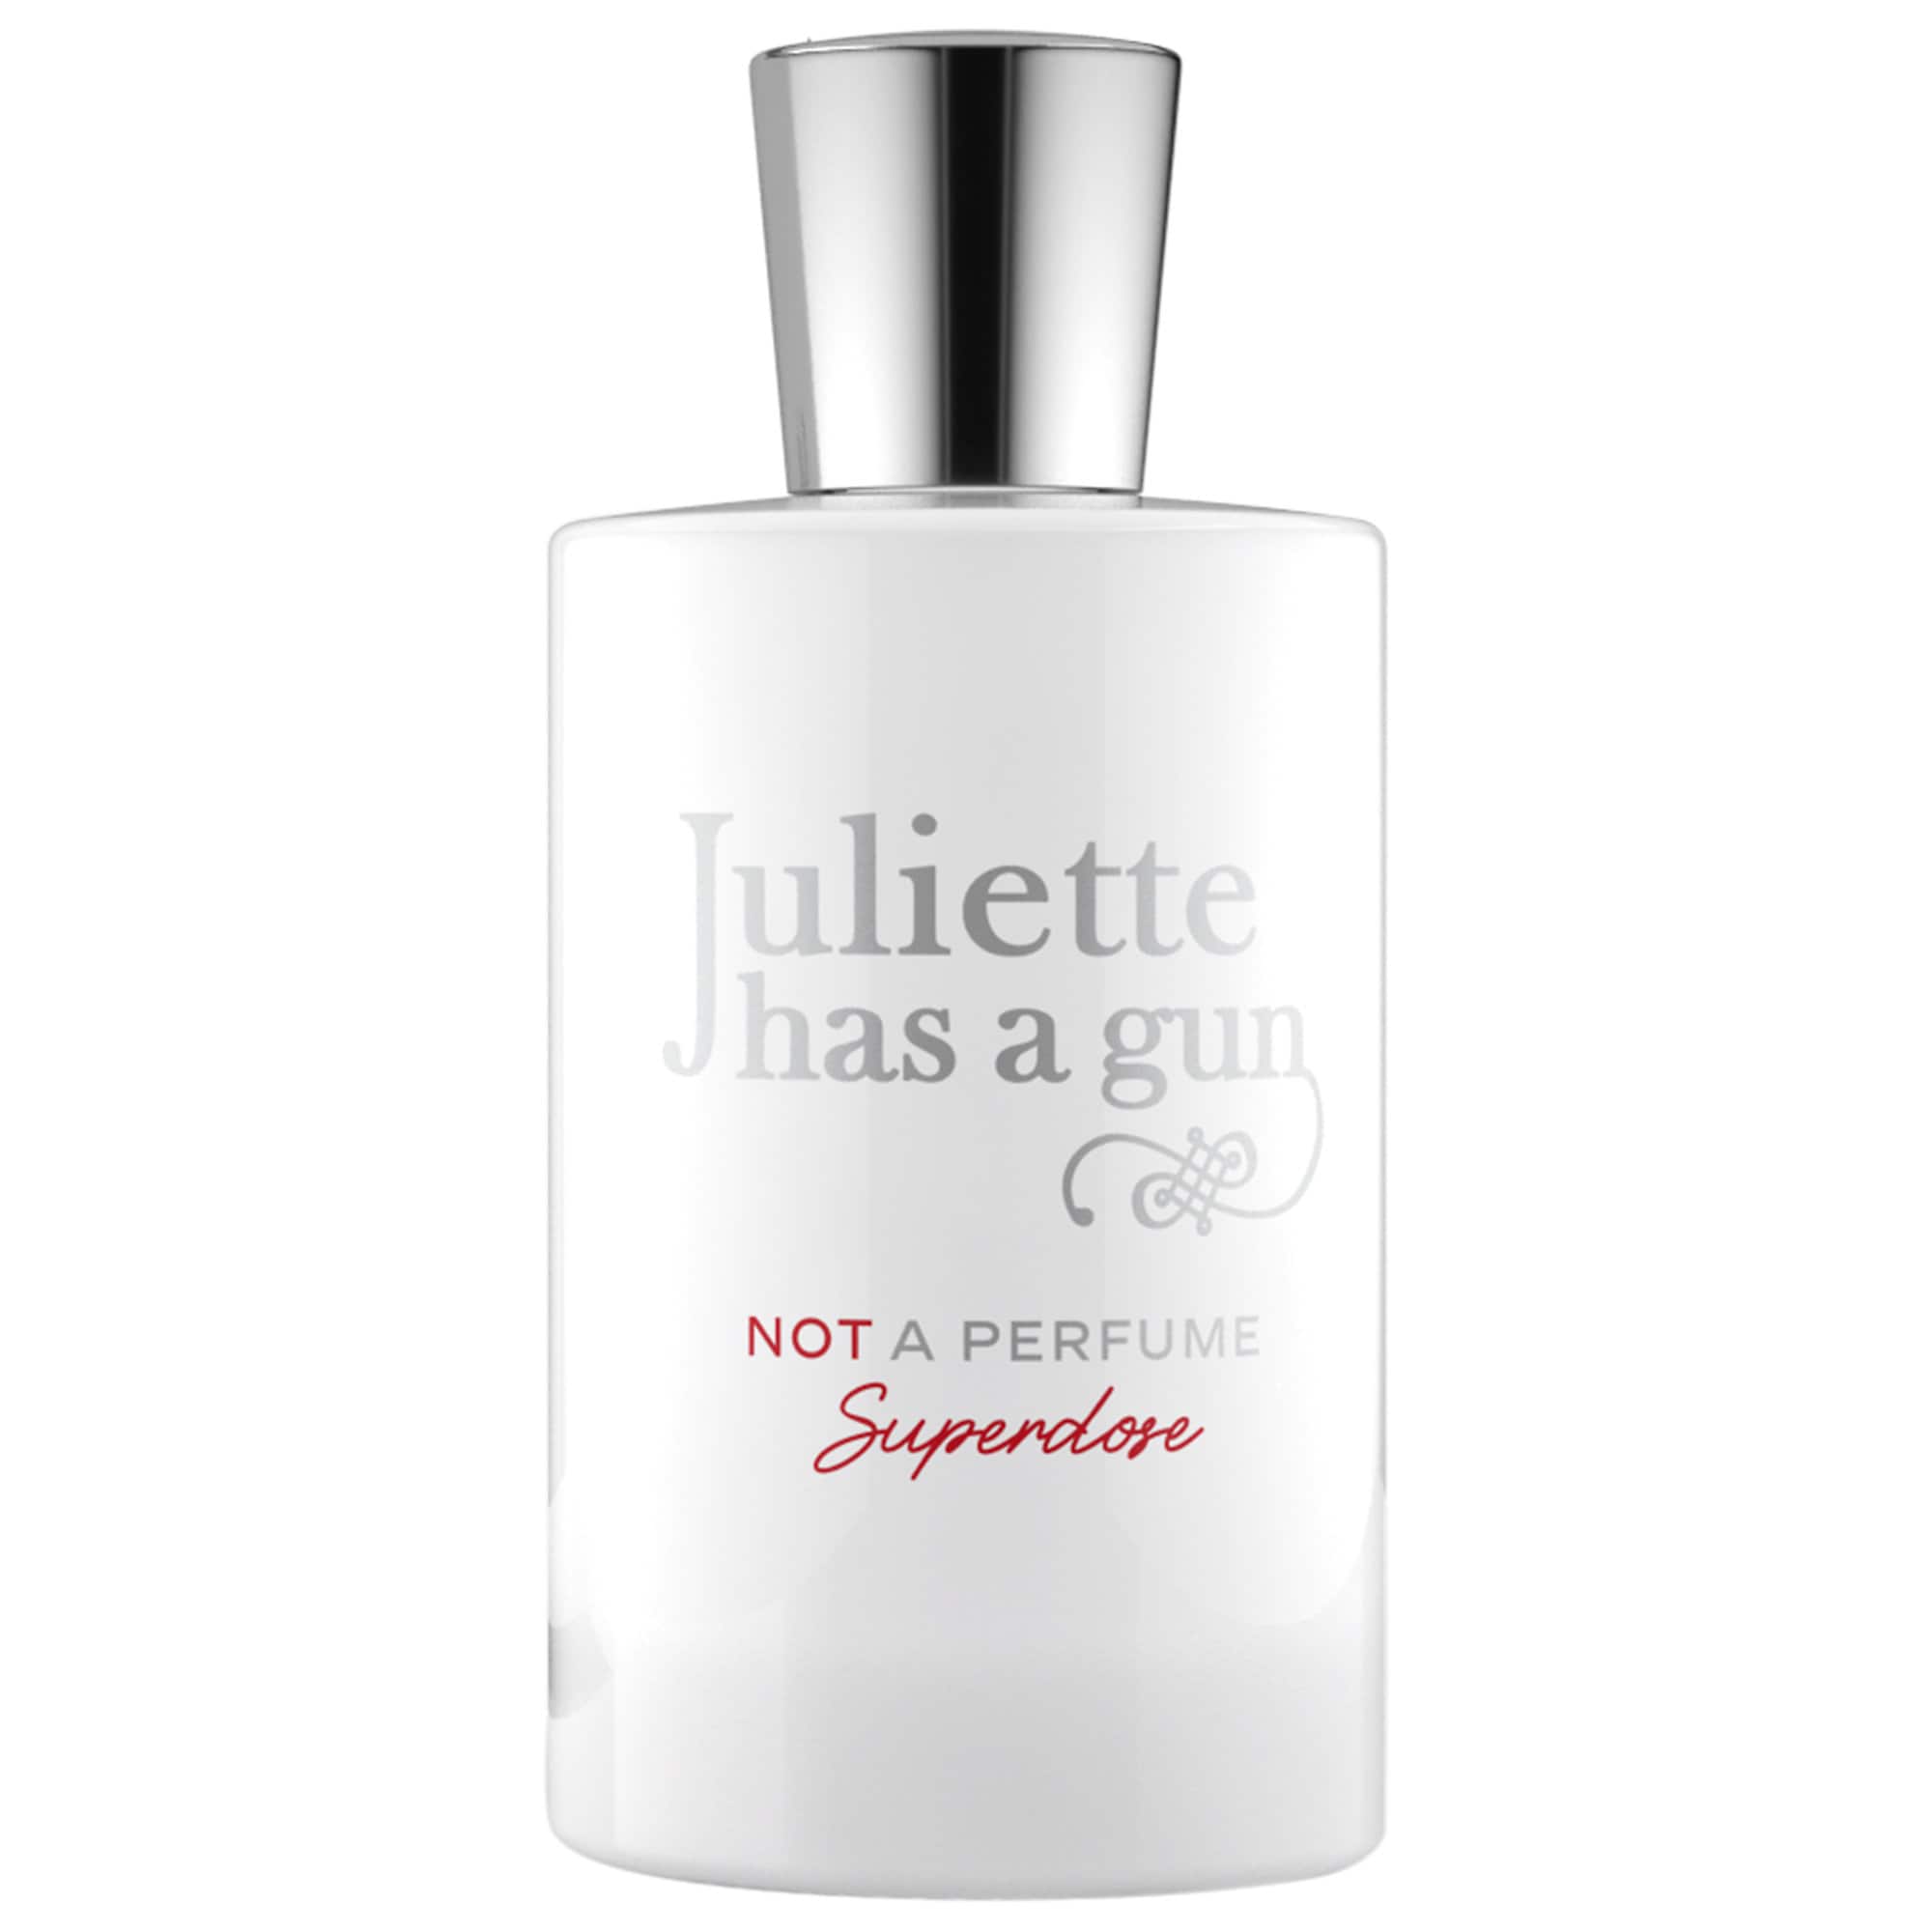 Not A Perfume Superdose Juliette Has a Gun